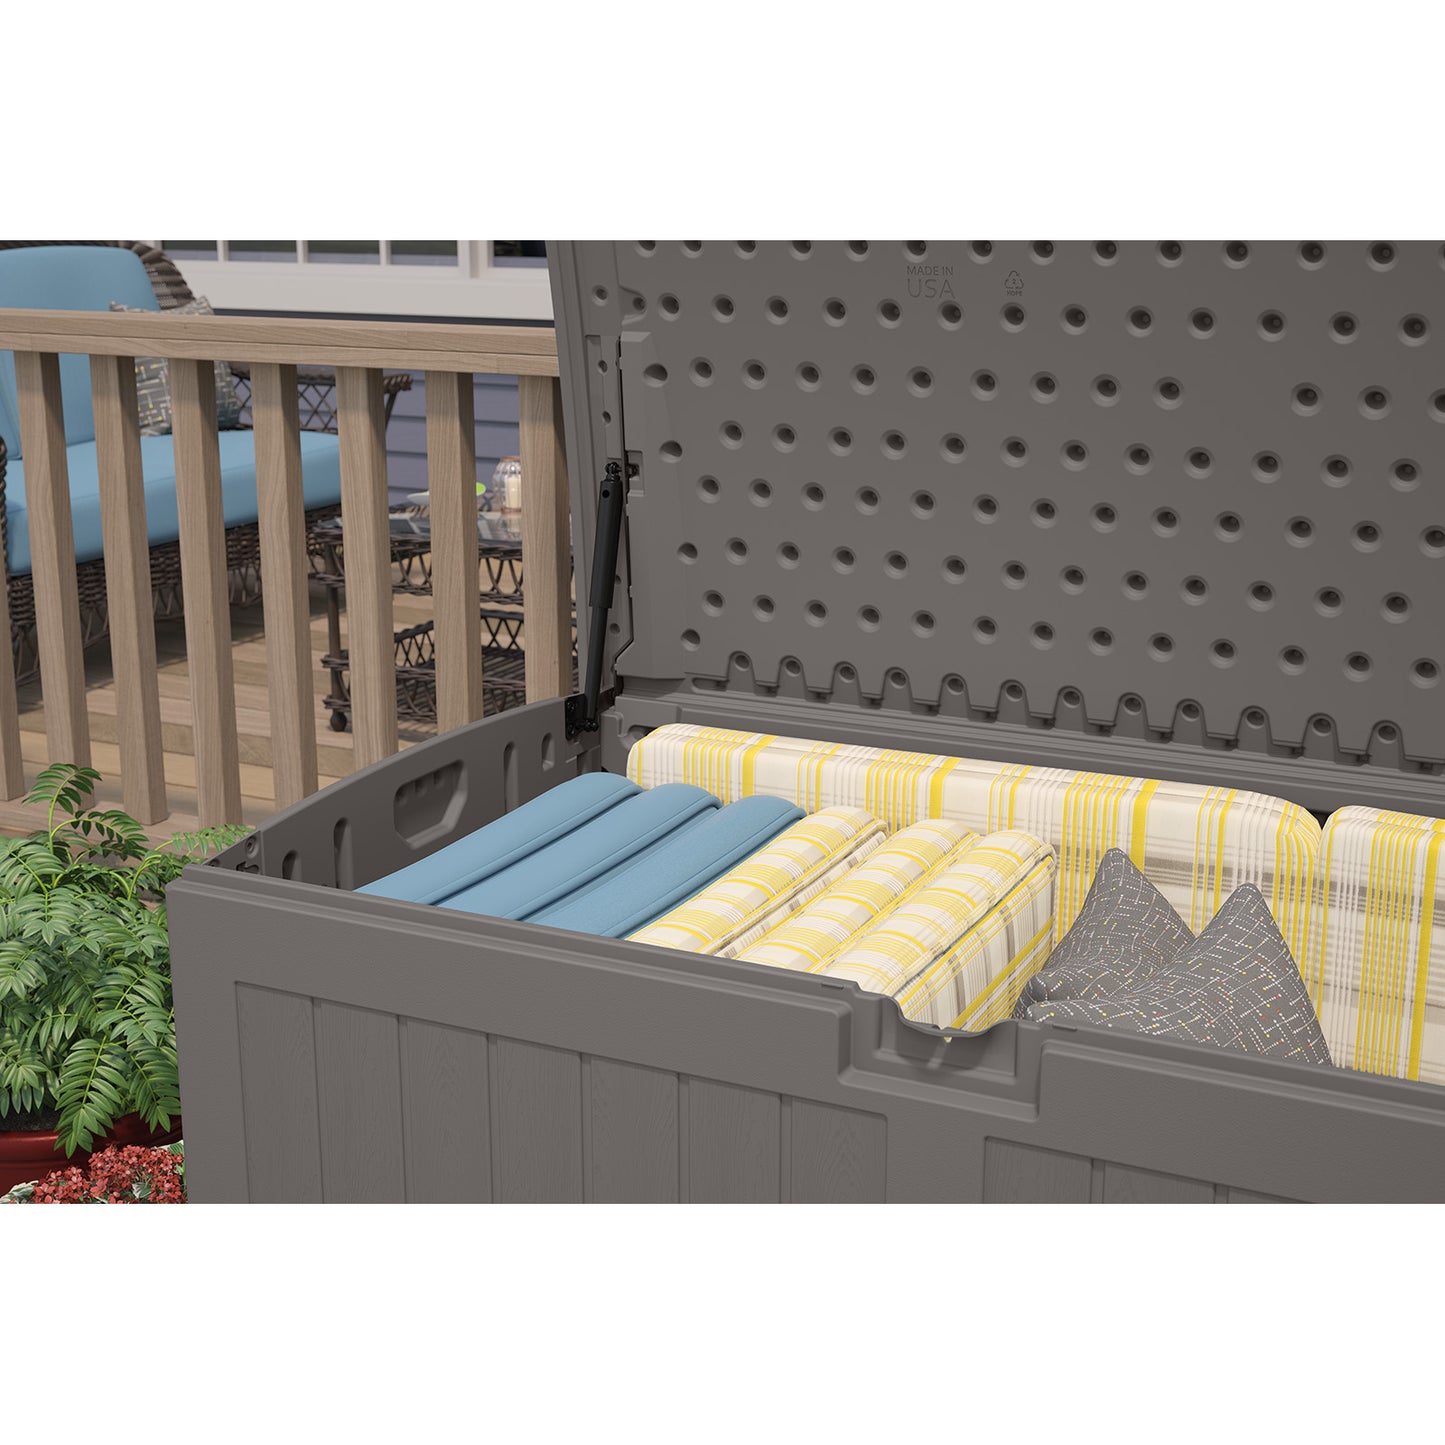 Suncast - Extra Large Deck Box - Stoney Grey (757Ltr)